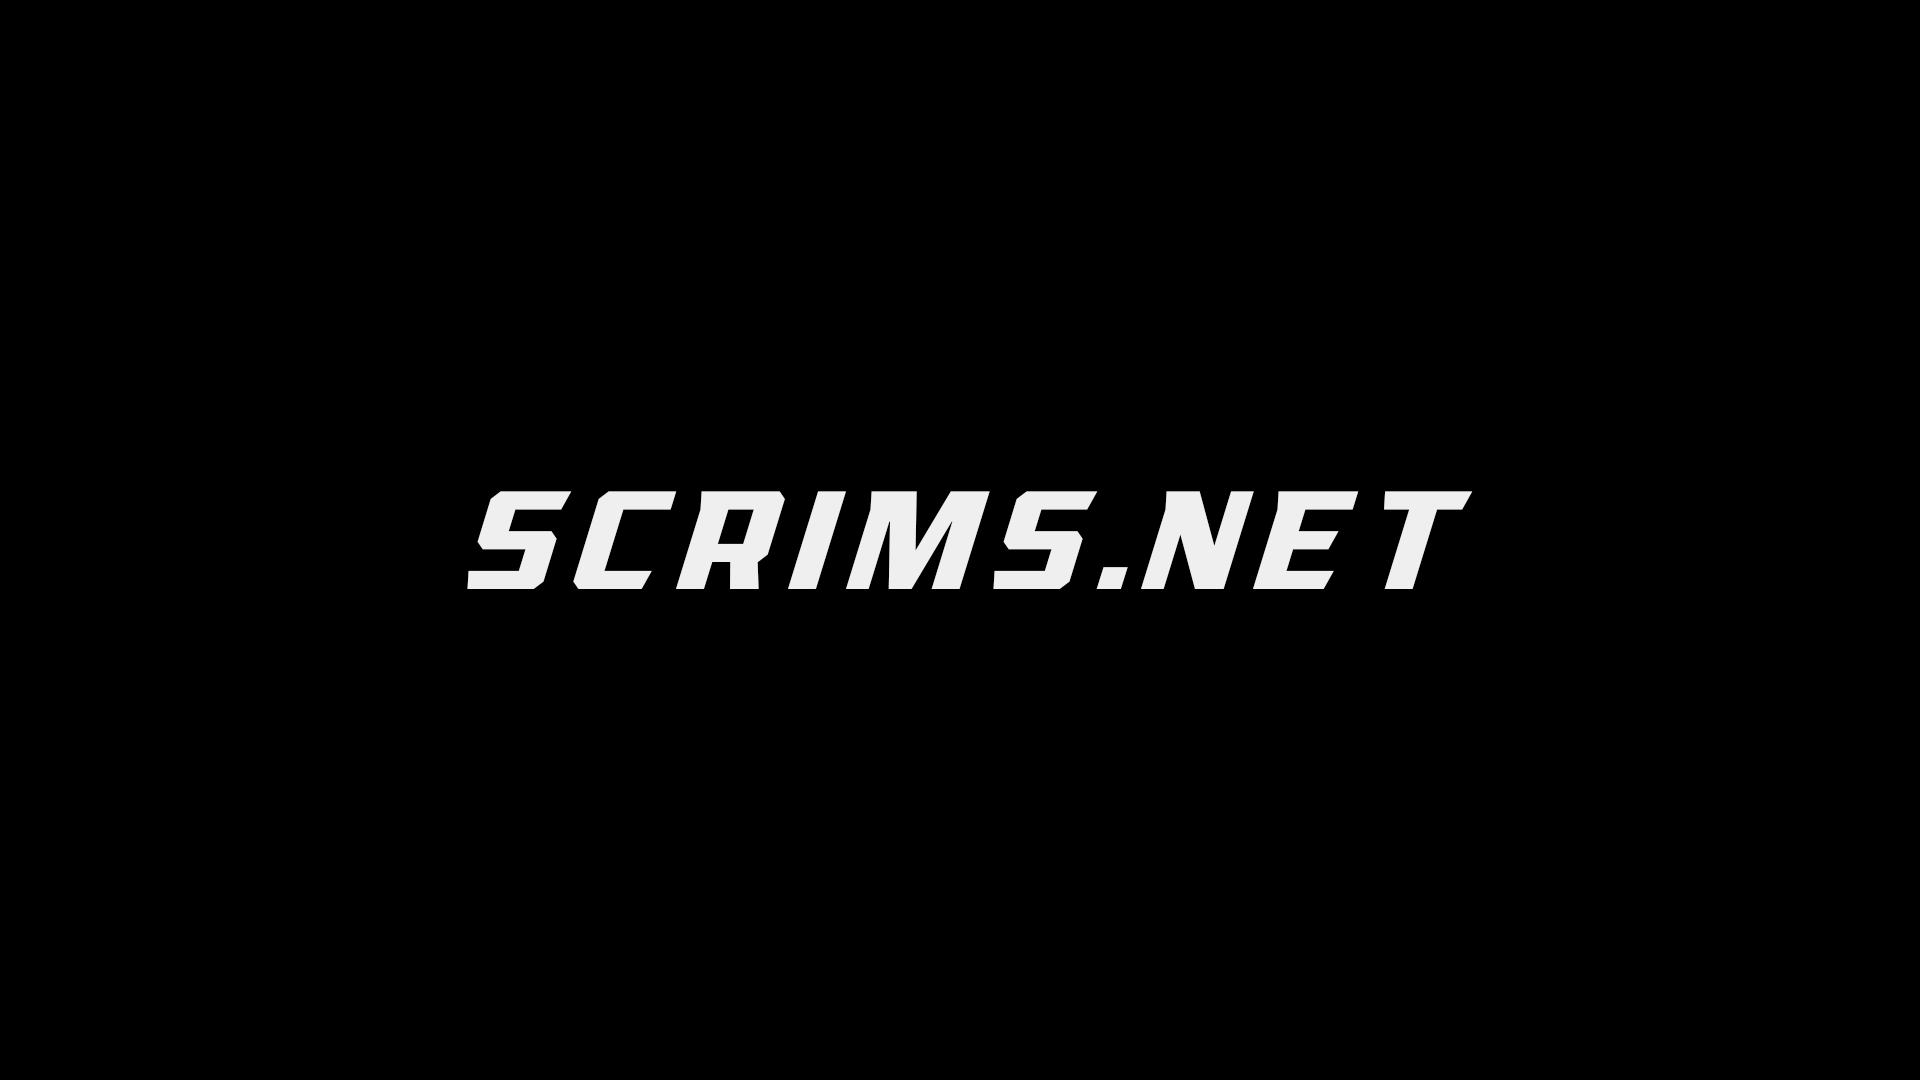 Fortnite Discord Servers For Scrims Pro Scrims Scrims Net - 